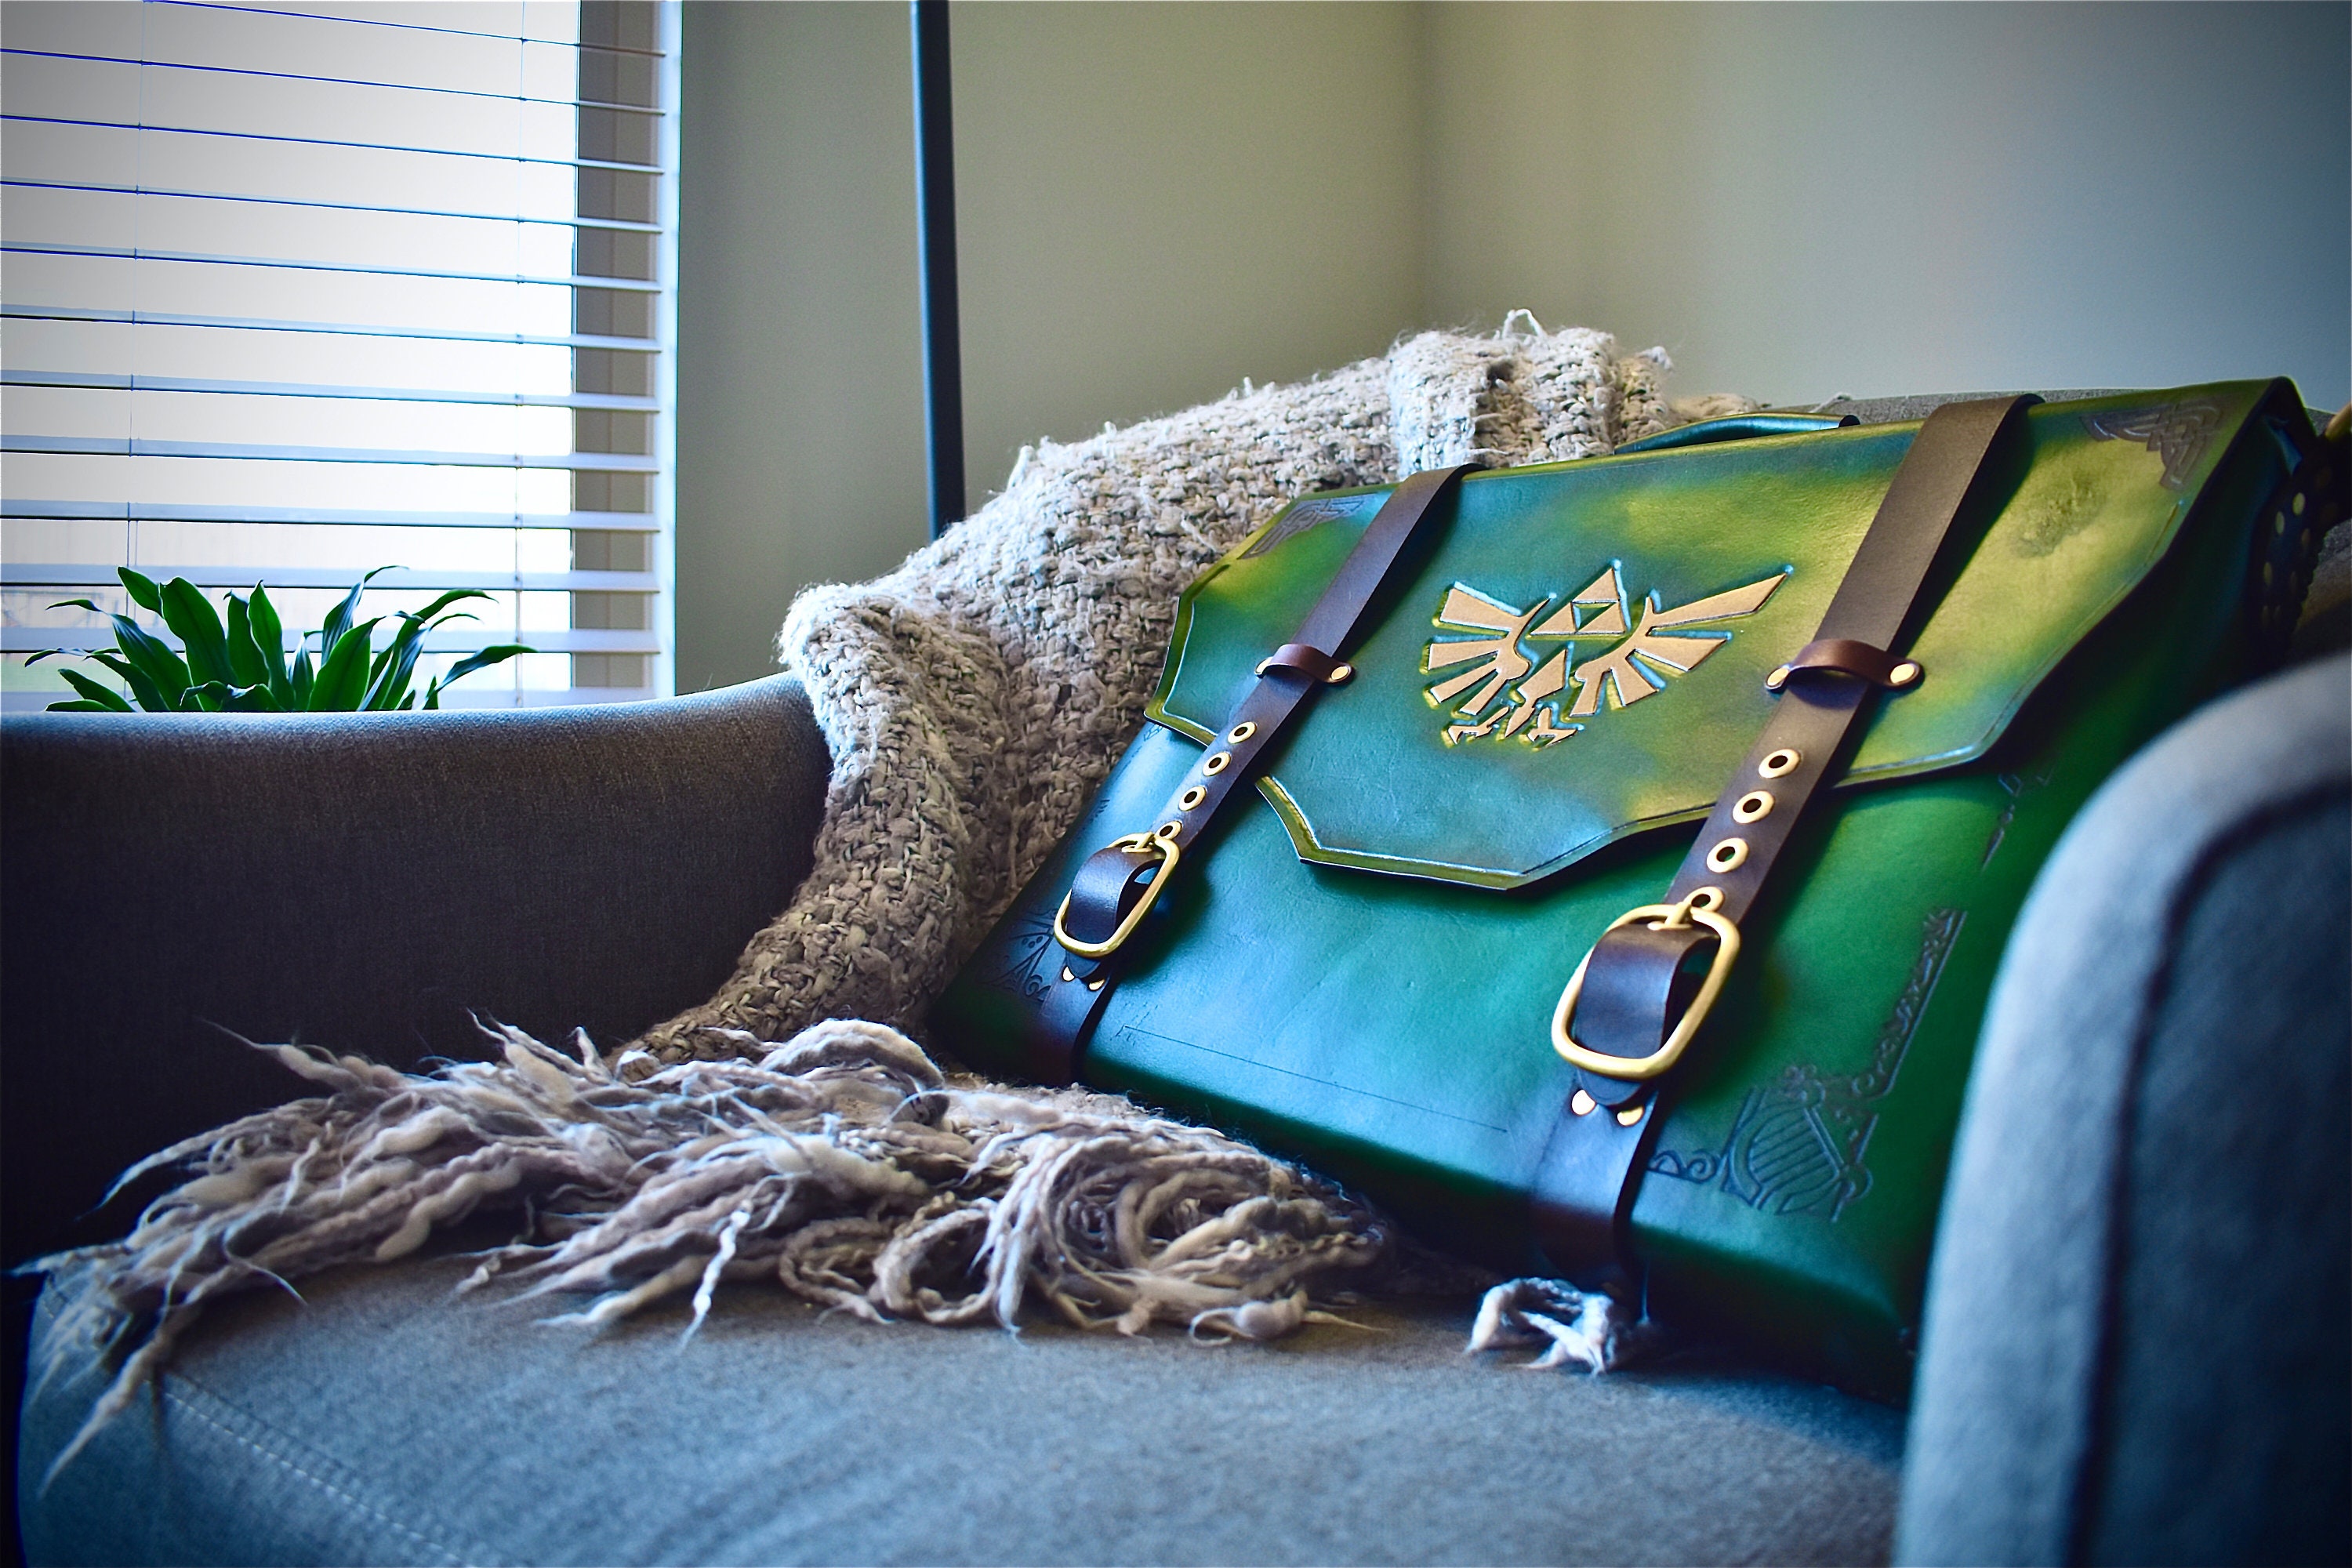 Zelda Women's Leather Tote